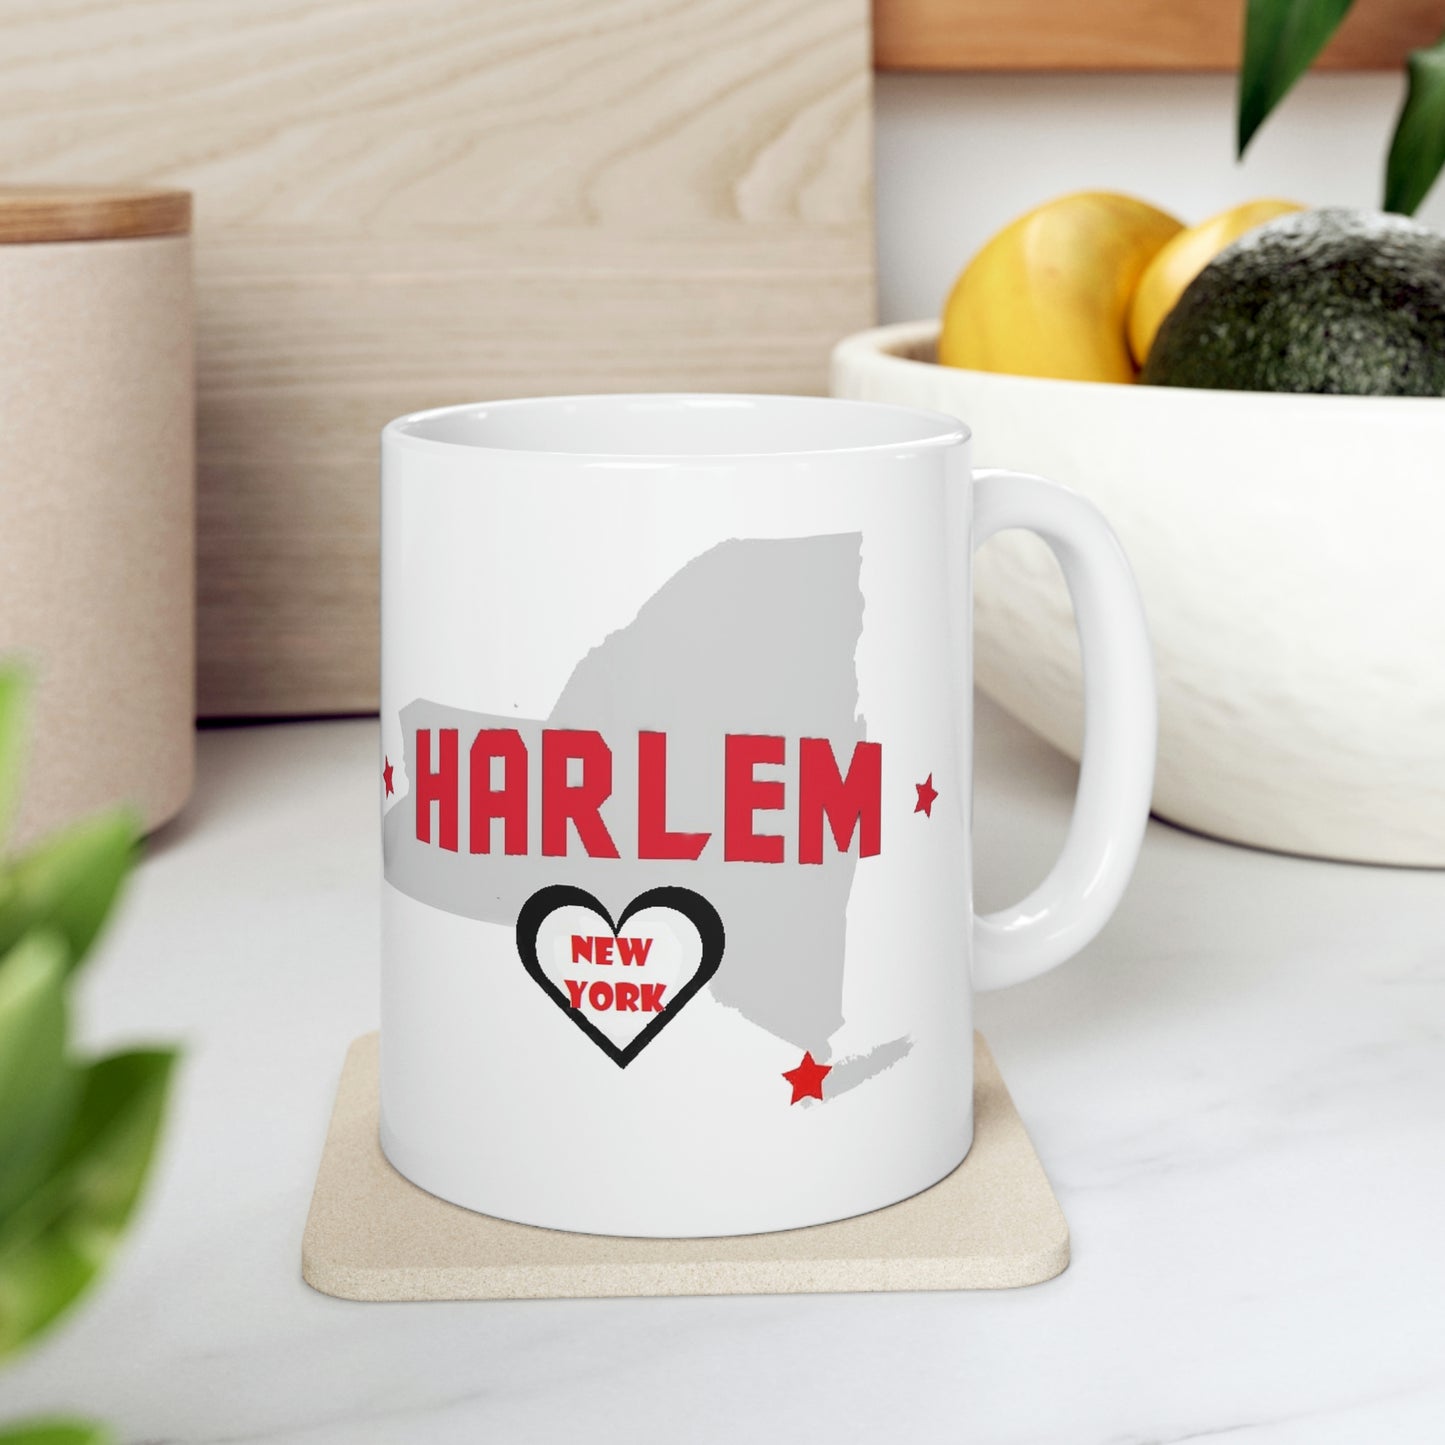 Harlem New York State Map Ceramic Mug with Fruit